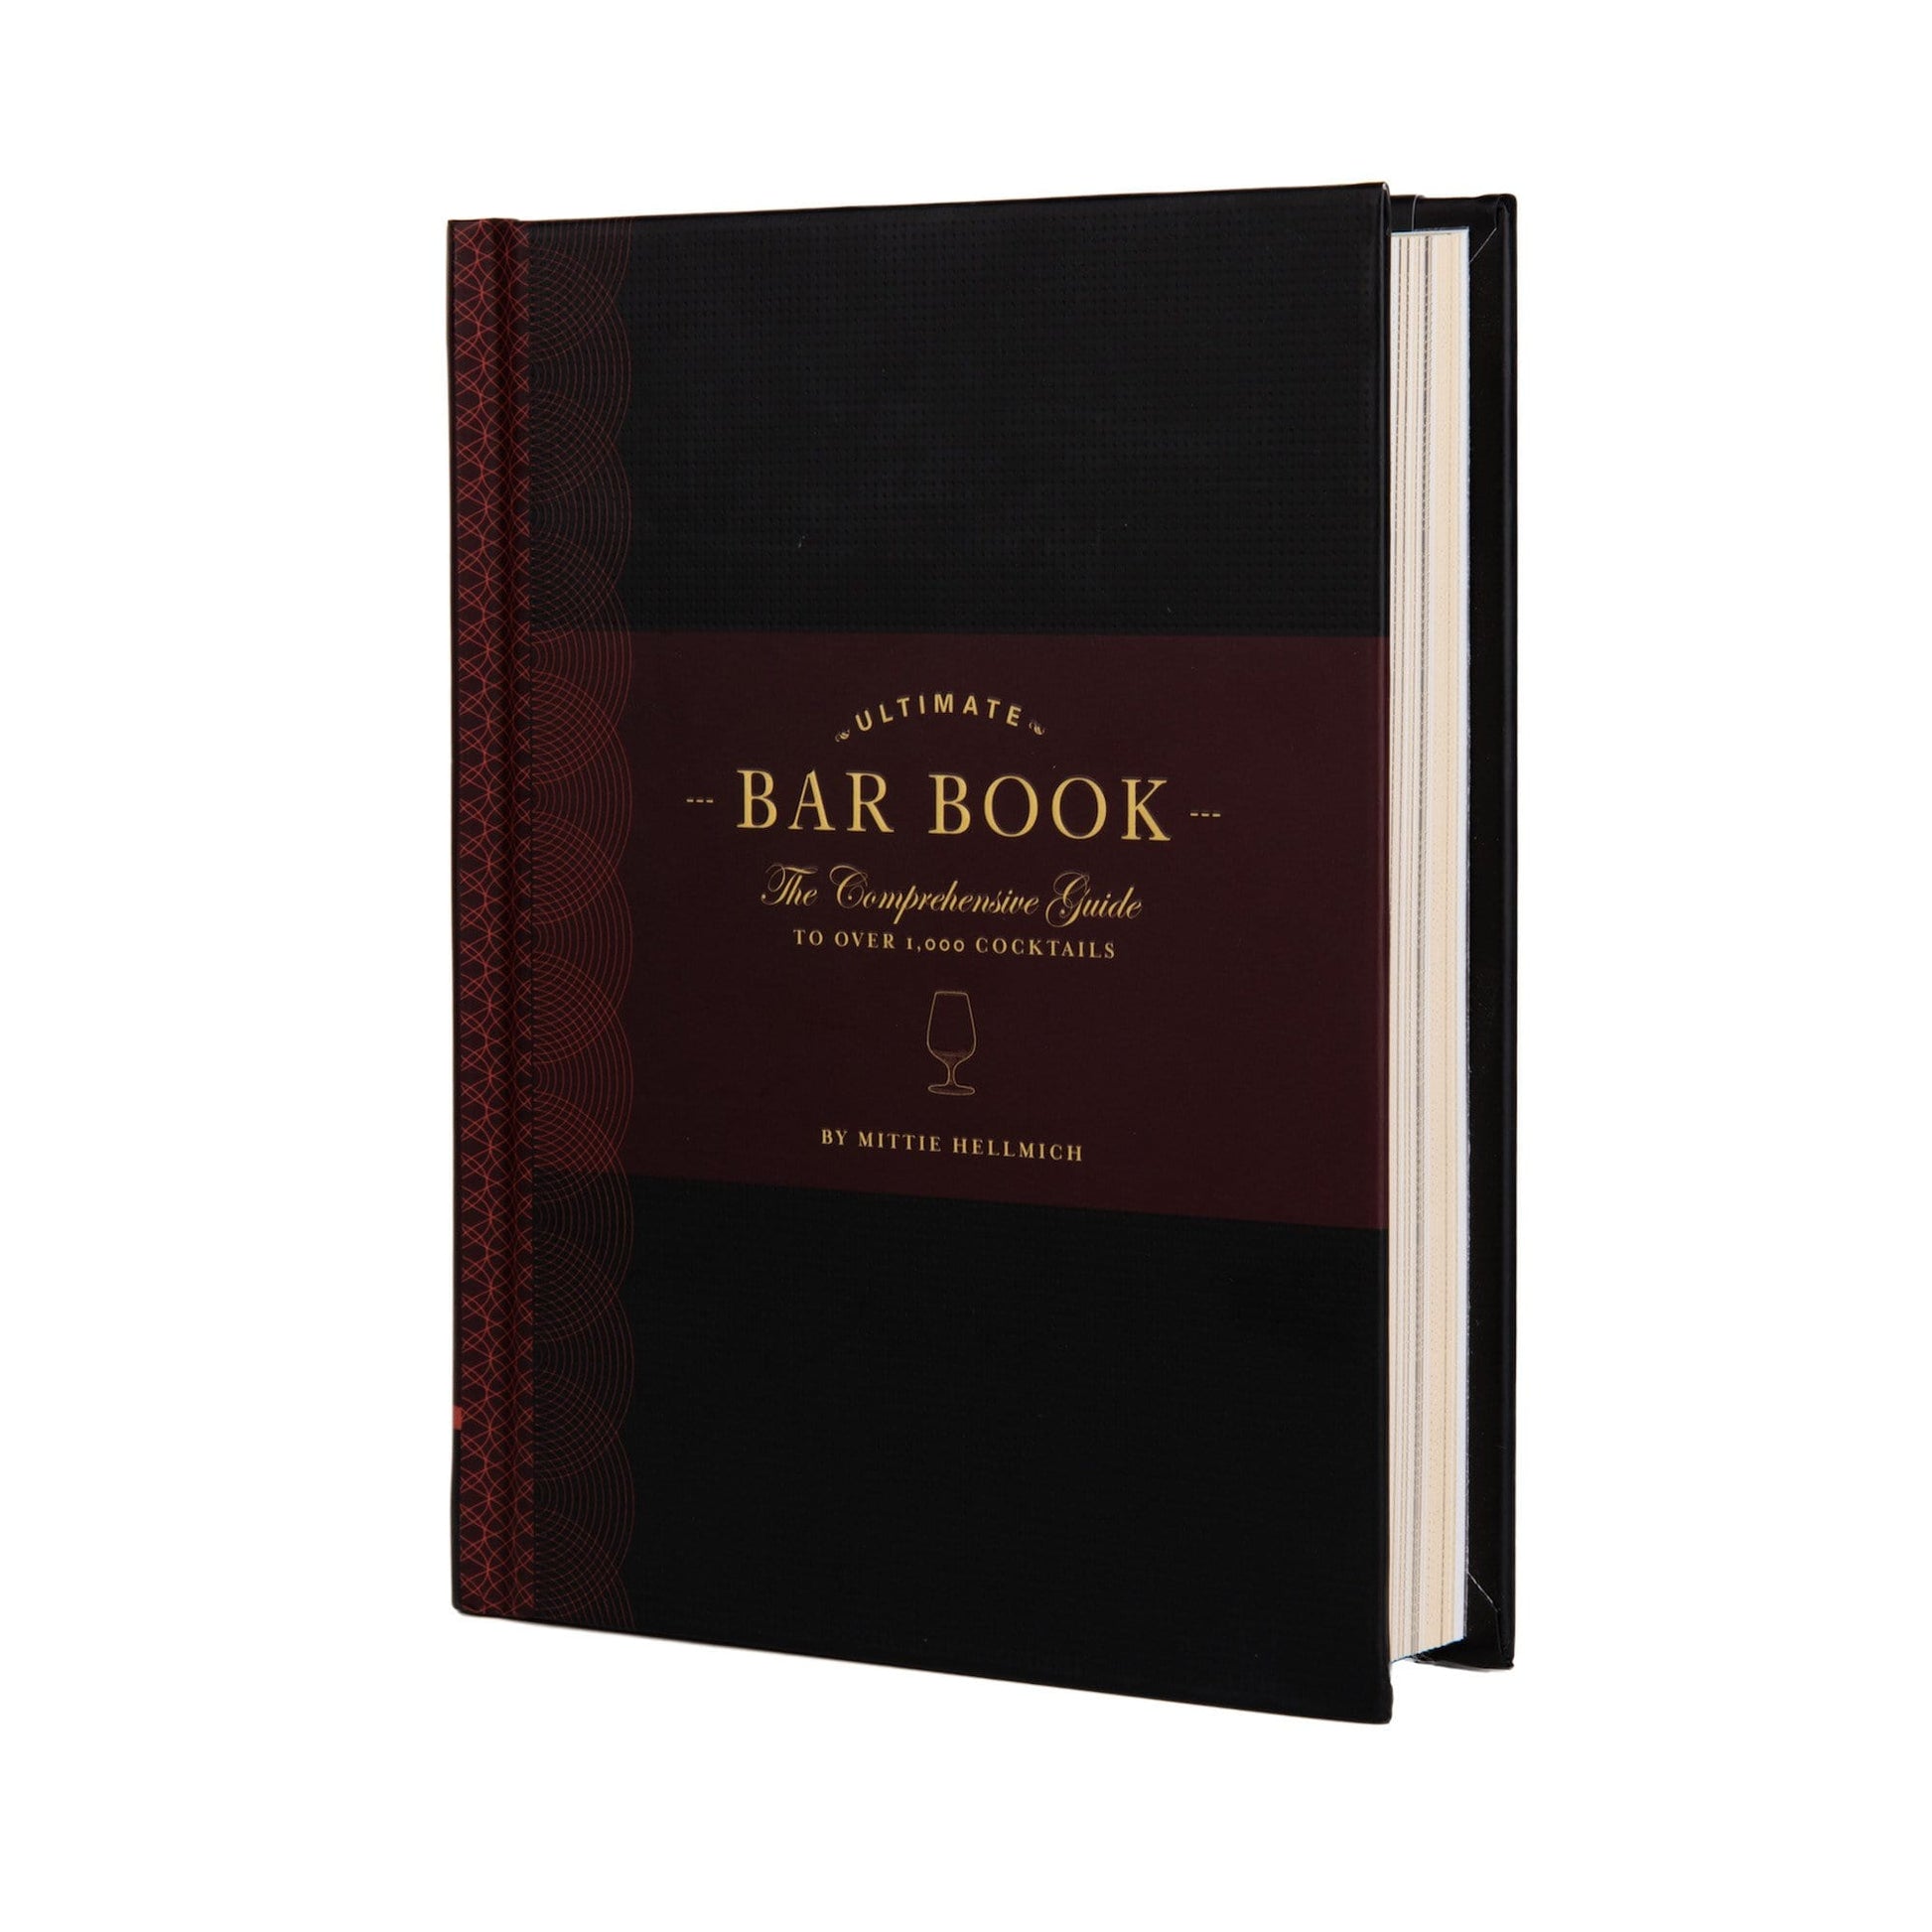 The Ultimate Bar Book - EC Proof